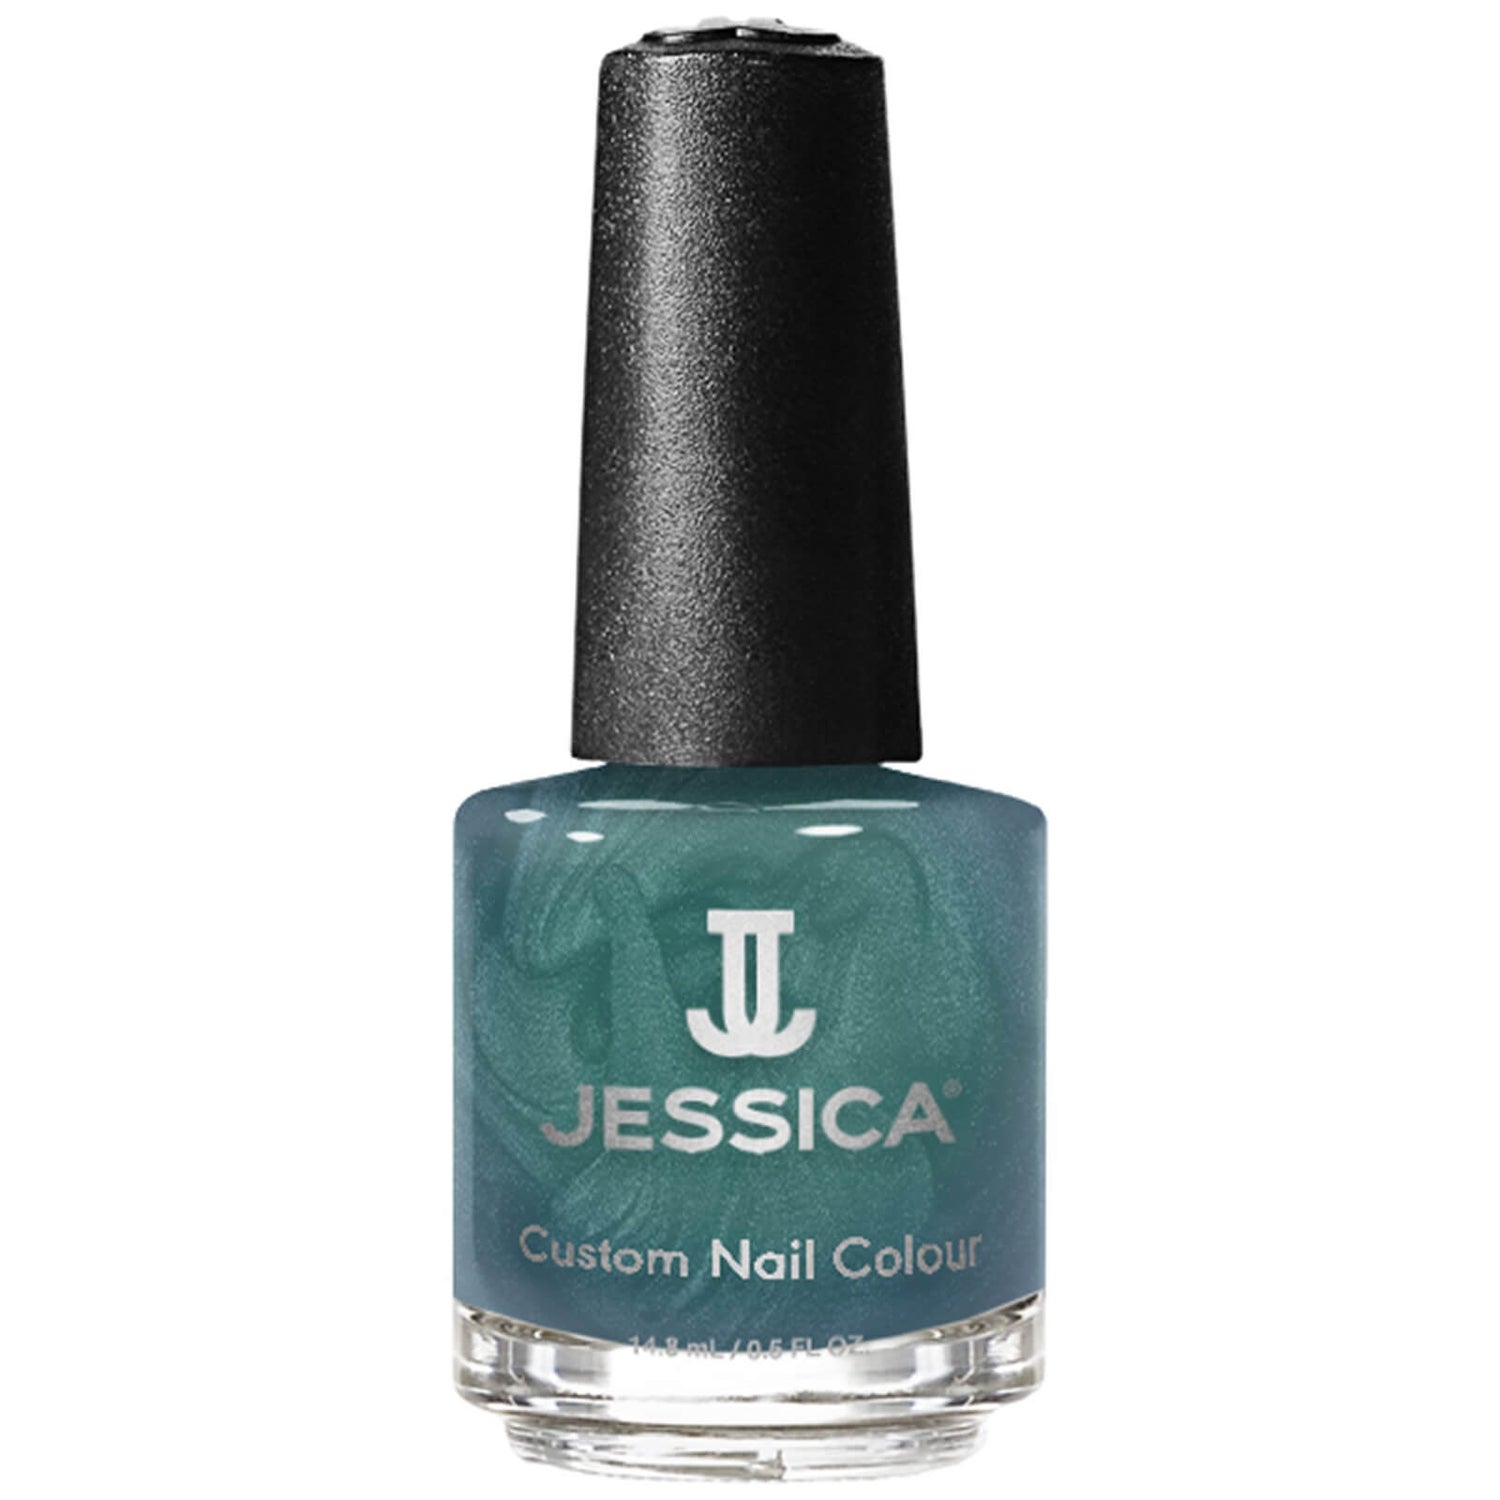 Jessica Custom Nail Colour Cabana Bay 14ml - Tini Bikini